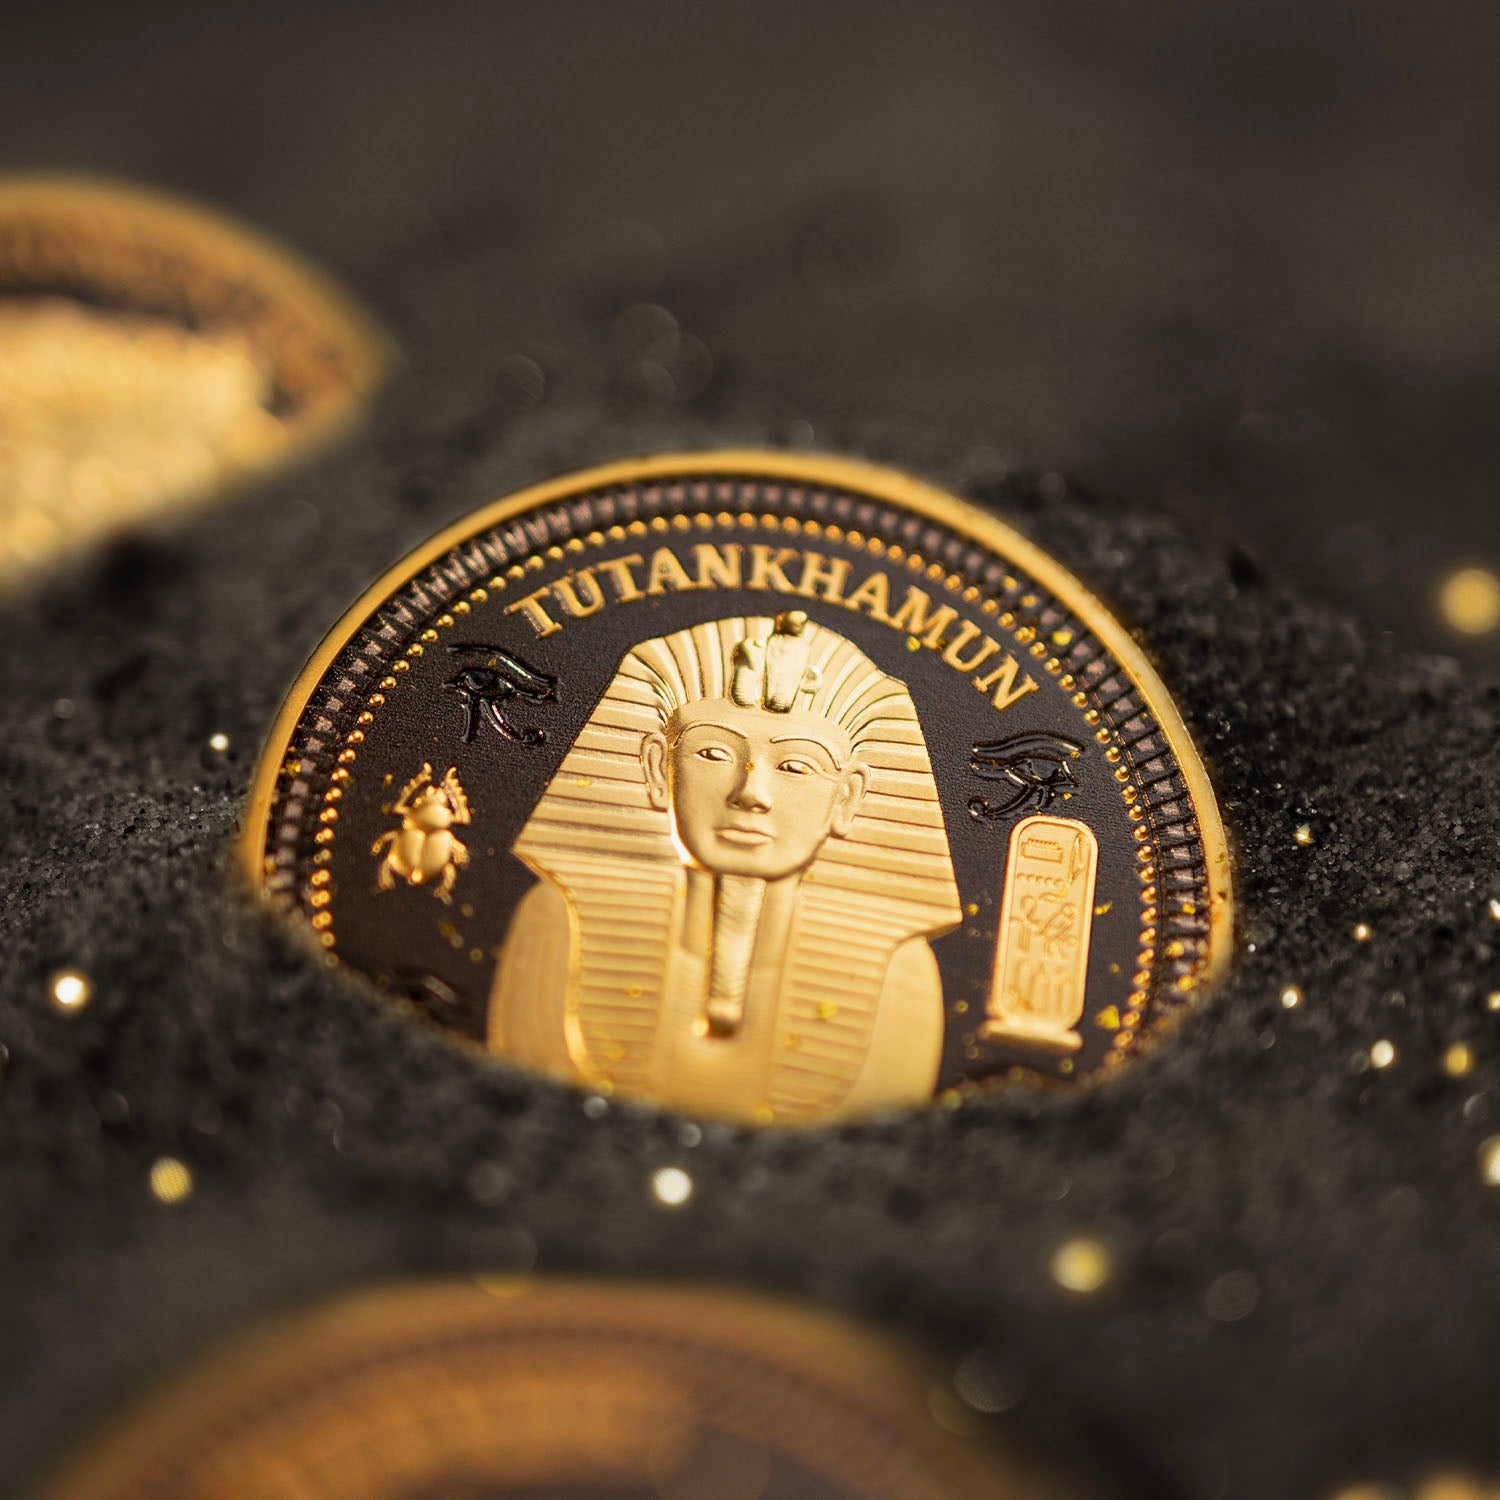 The Mysteries of Ancient Egypt Tutankhamun Half Dollar Coin